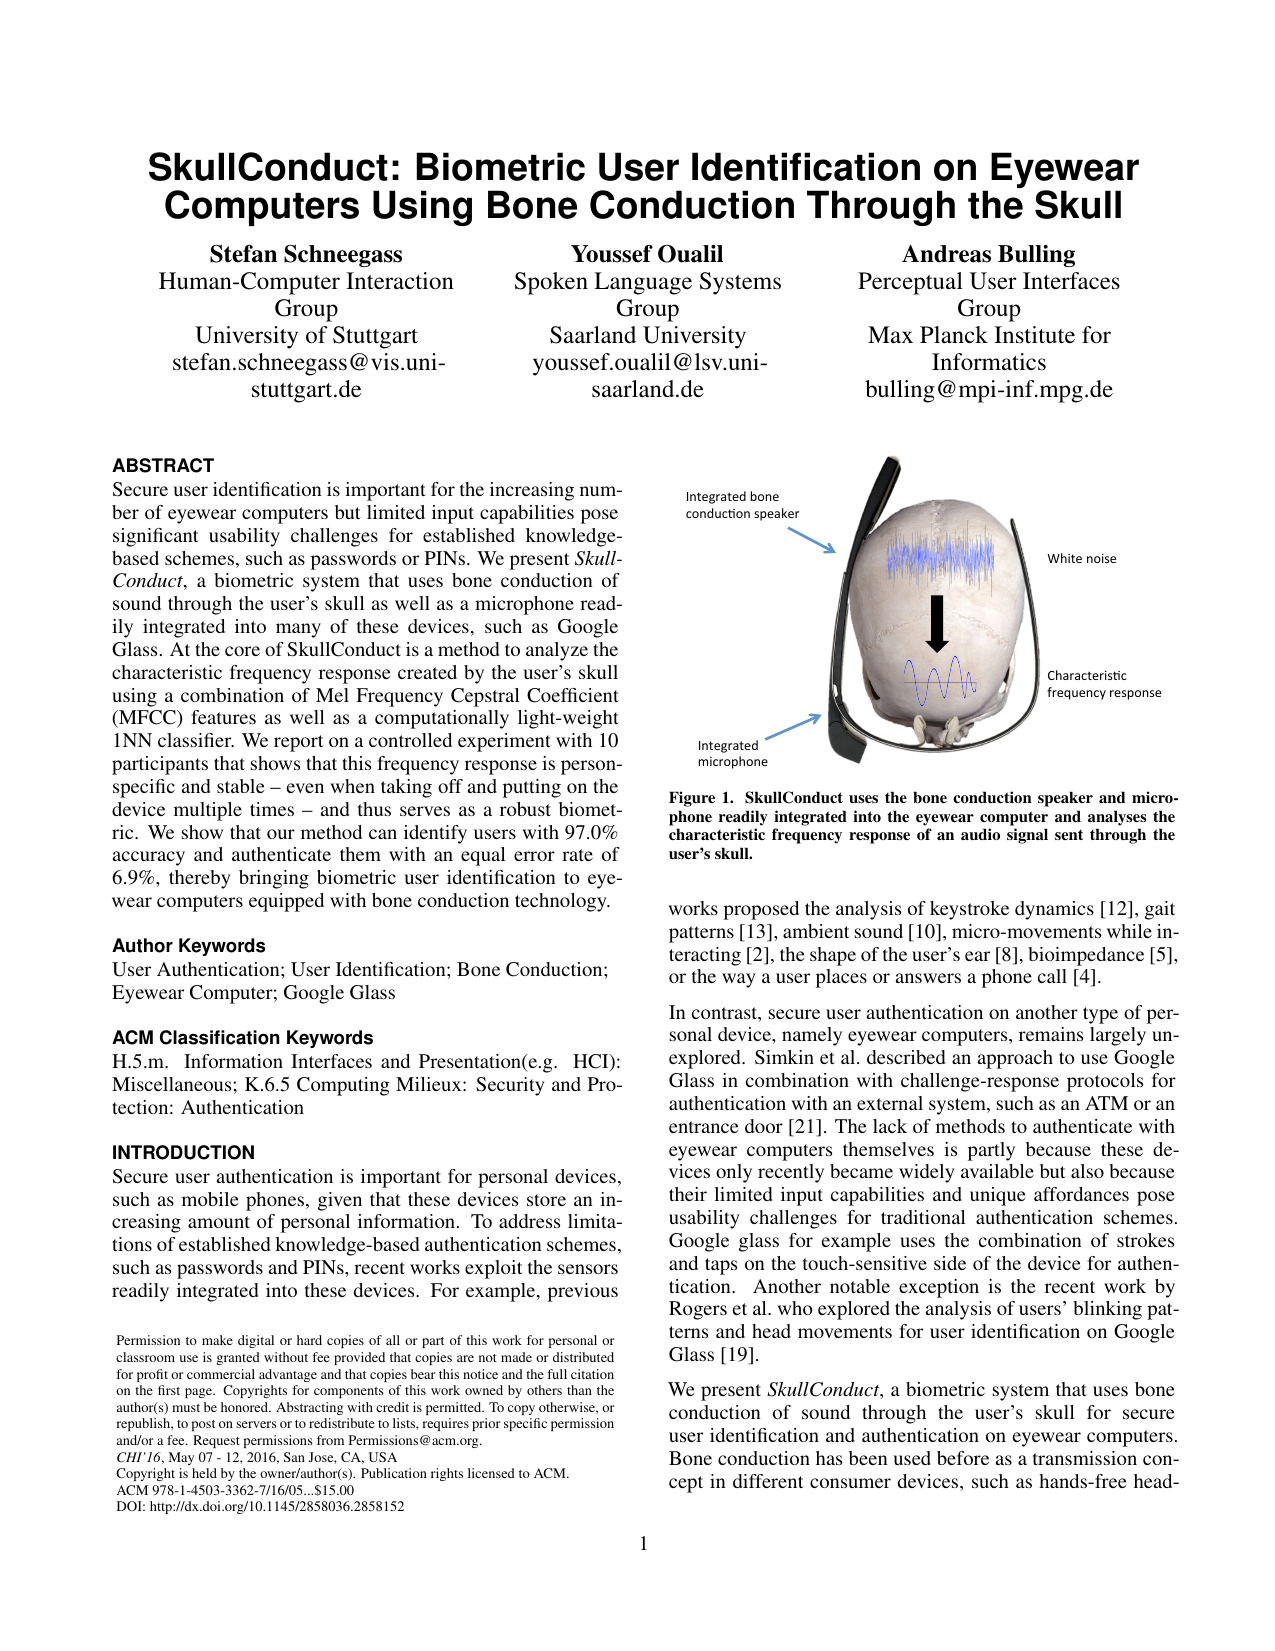 SkullConduct: Biometric User Identification on Eyewear Computers Using Bone Conduction Through the Skull